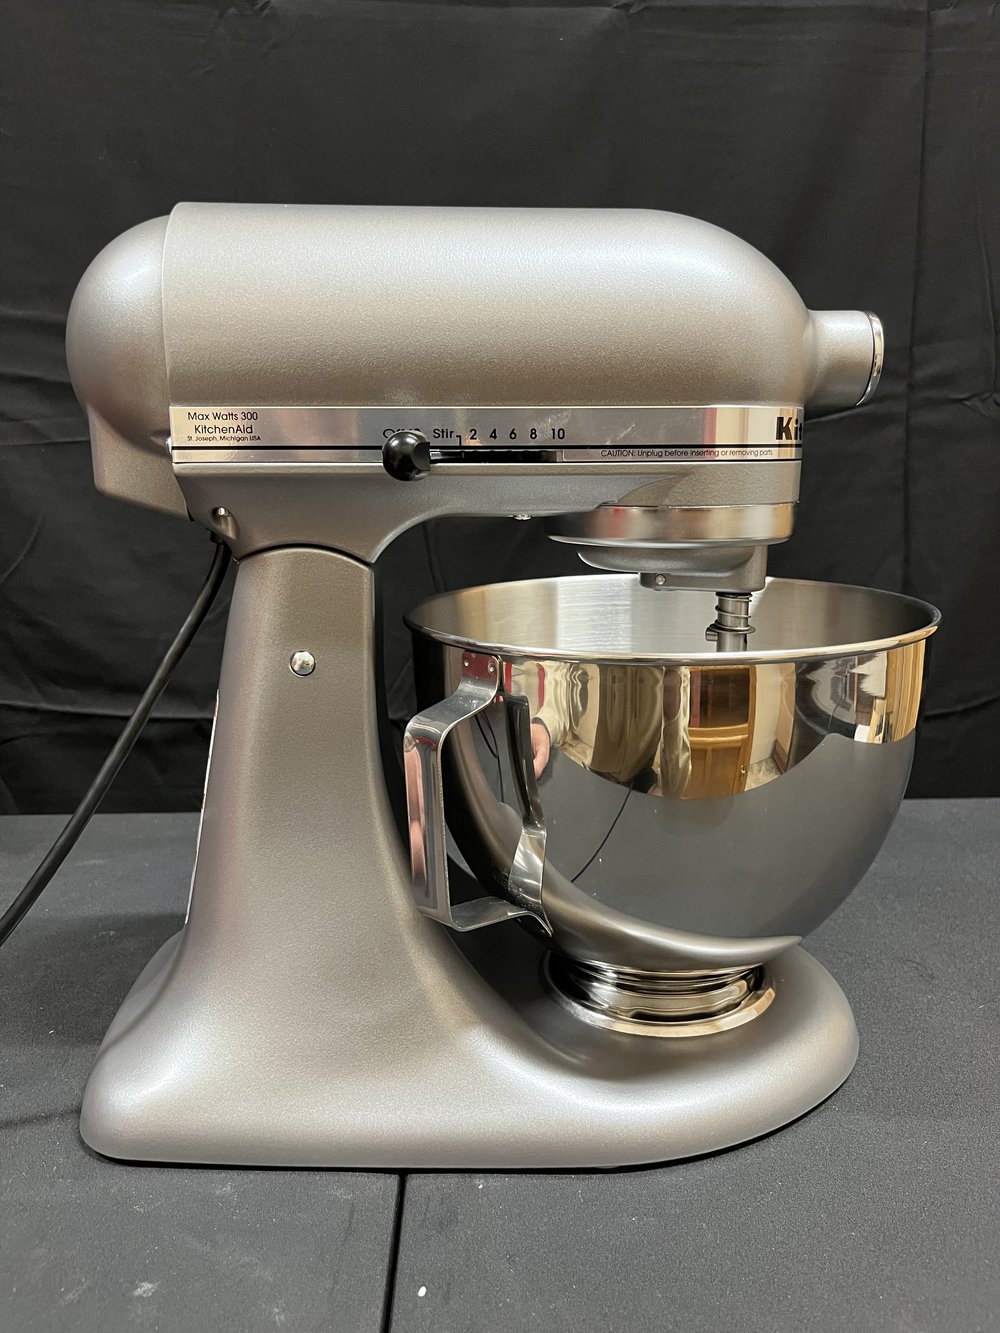 KitchenAid KSM97SL Deluxe 4.5 Quart Tilt-Head Stand Mixer, Silver